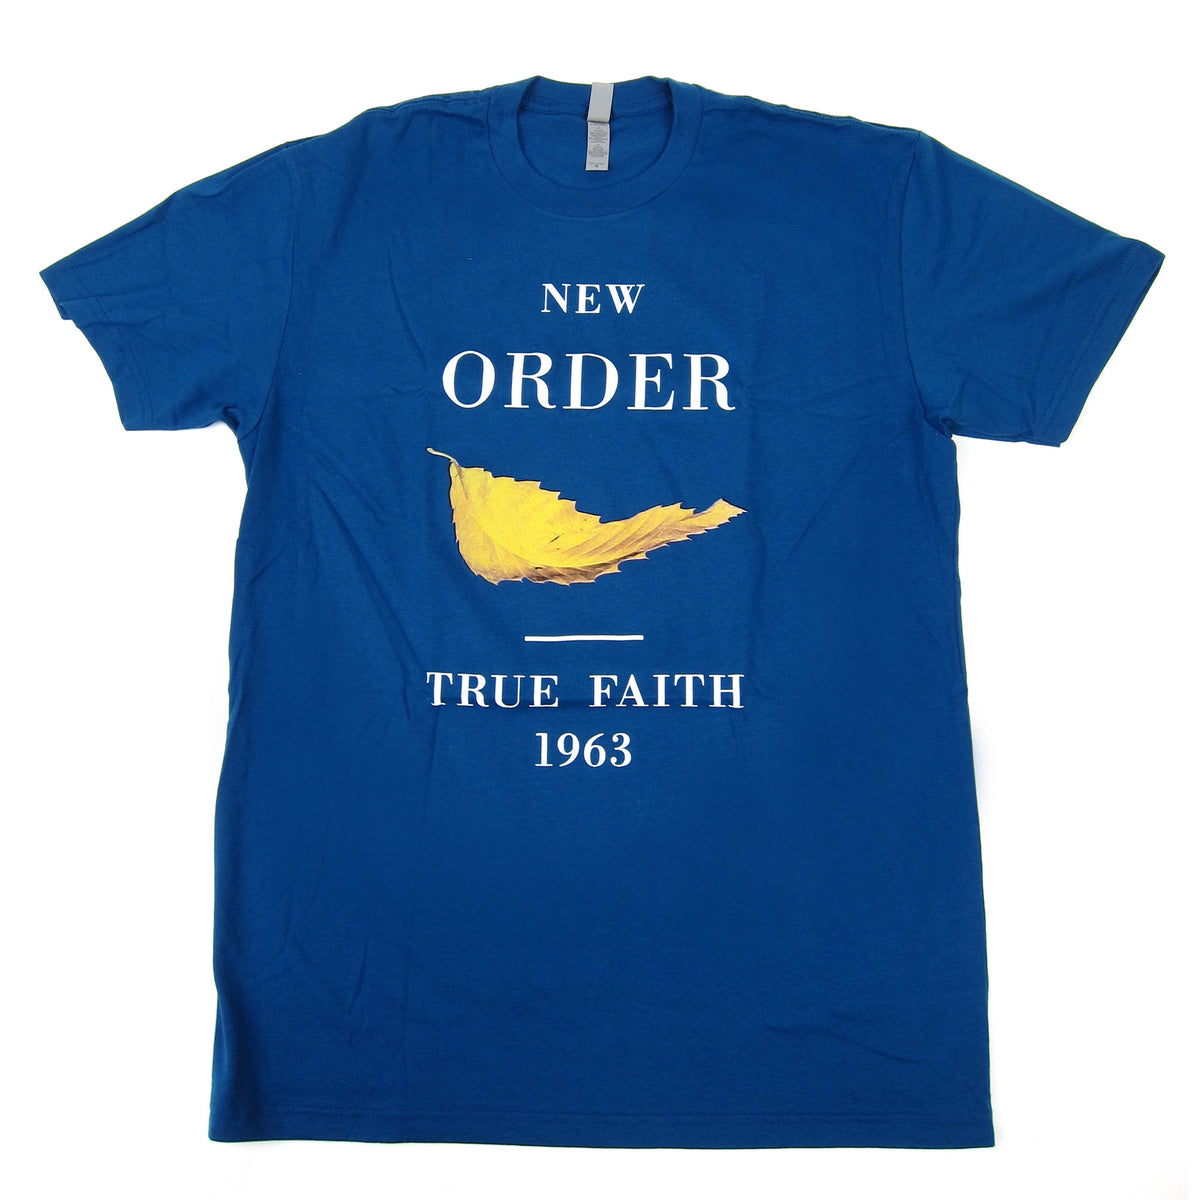 True faith new. New order true Faith. New order – true Faith\1963. Футболка true Faith. The New order Shirt.